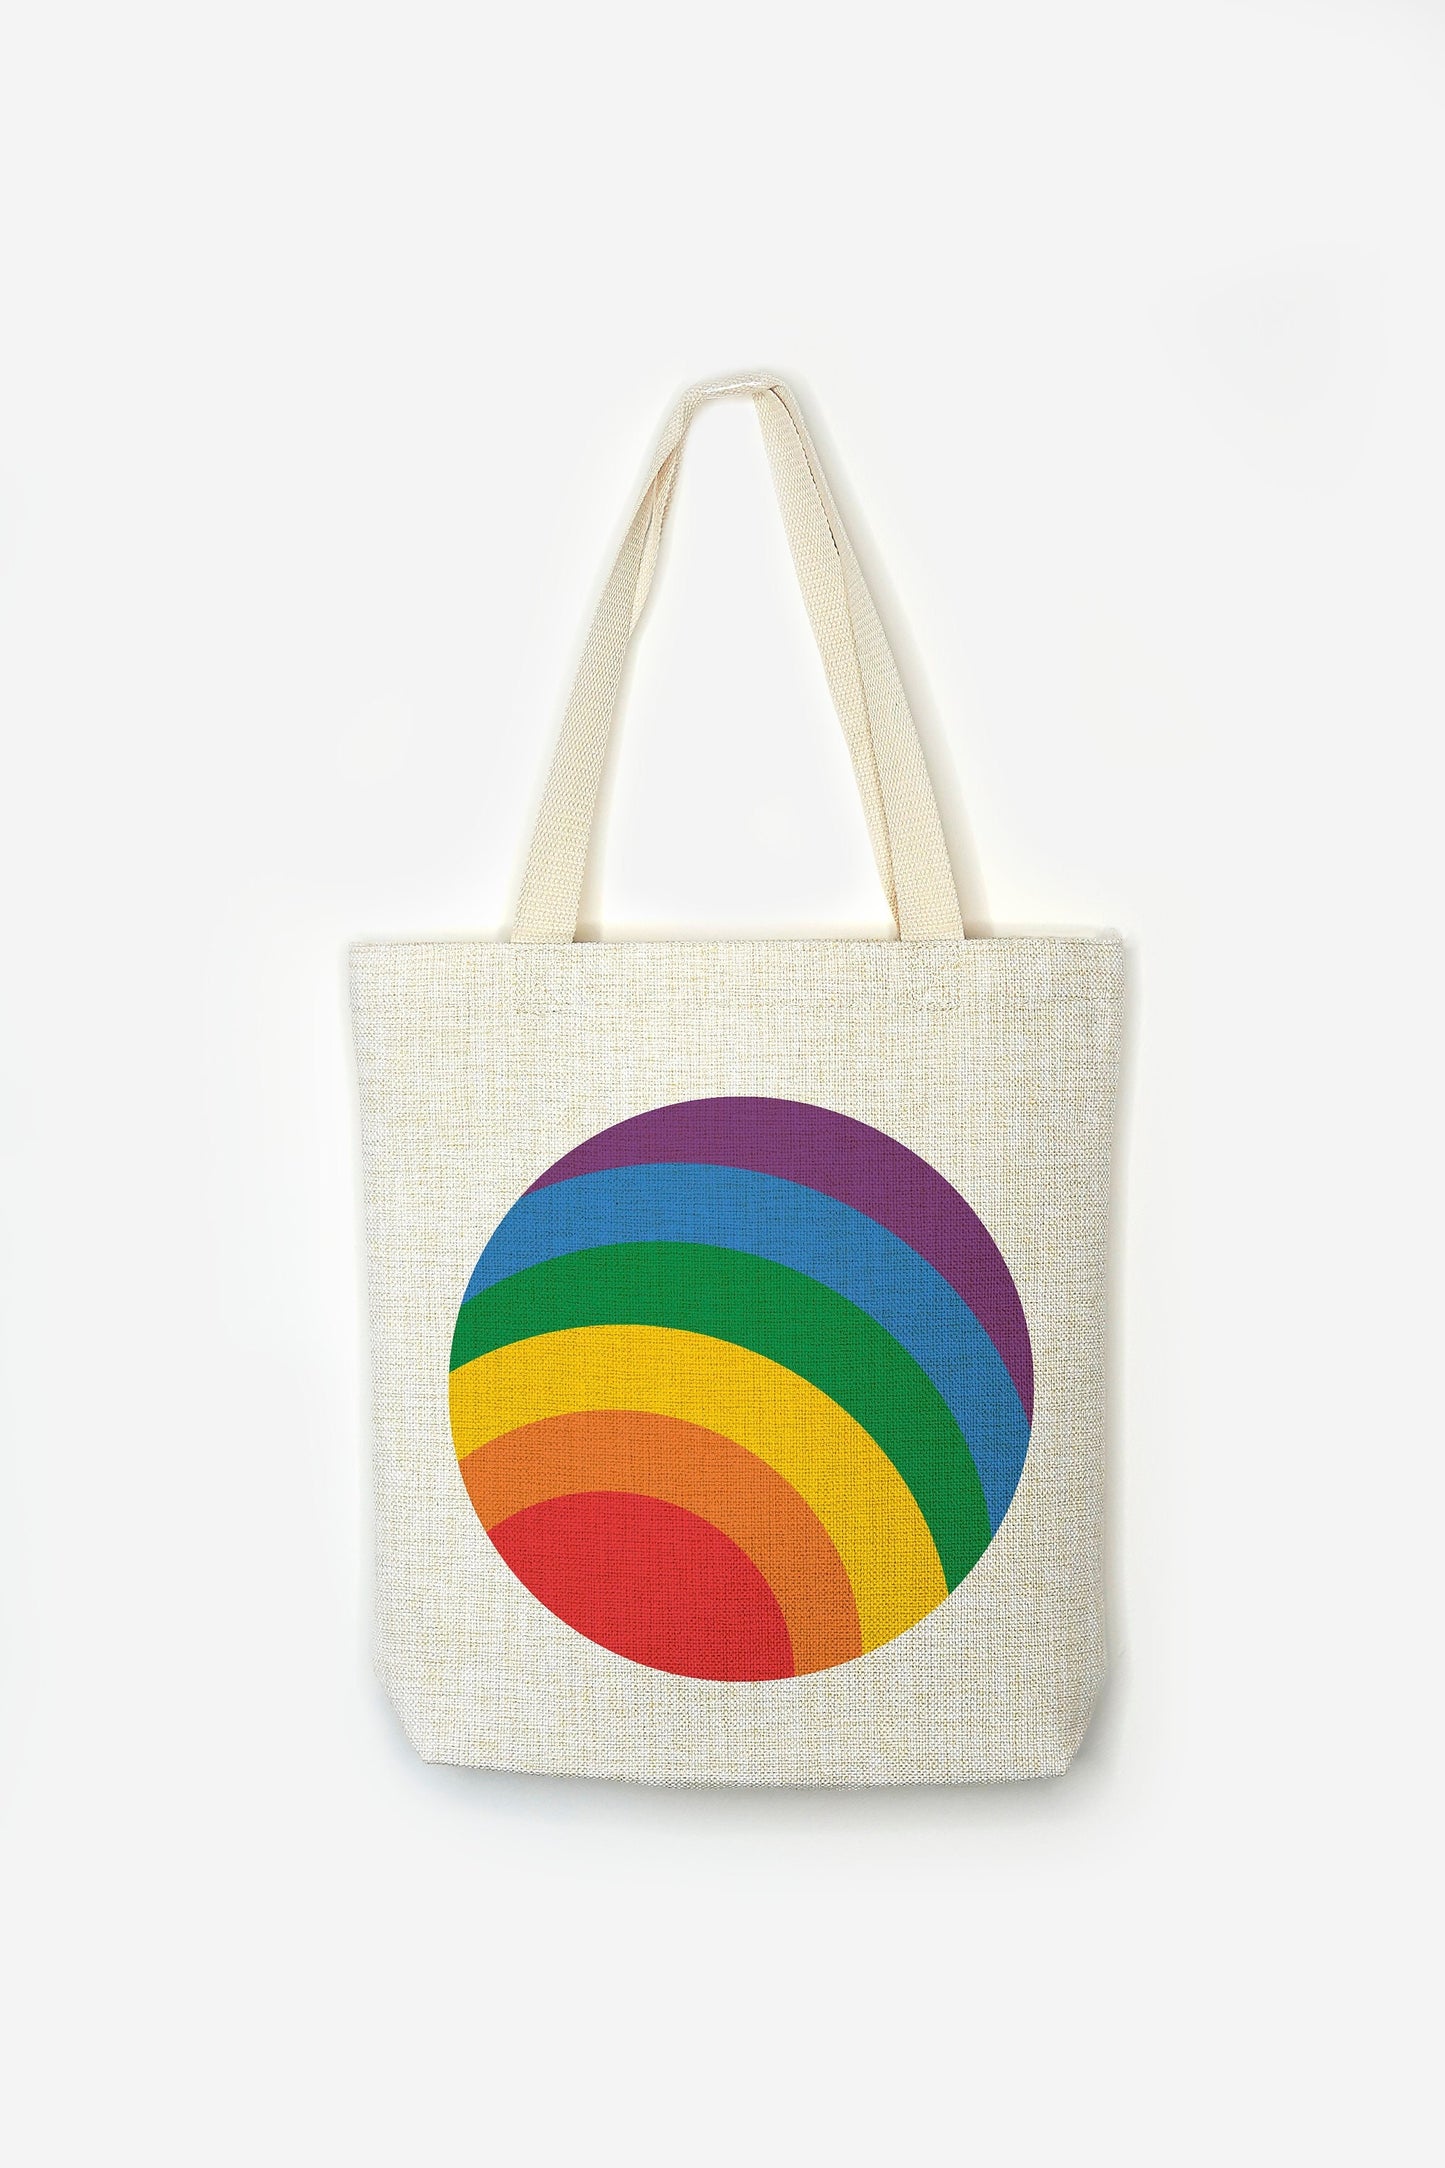 Rainbow Flag Tote Bag - Premium Linen Cotton Canvas - Subtle  Pride Flag LGBT Gay Lesbian Bi Transgender - Festival Merch